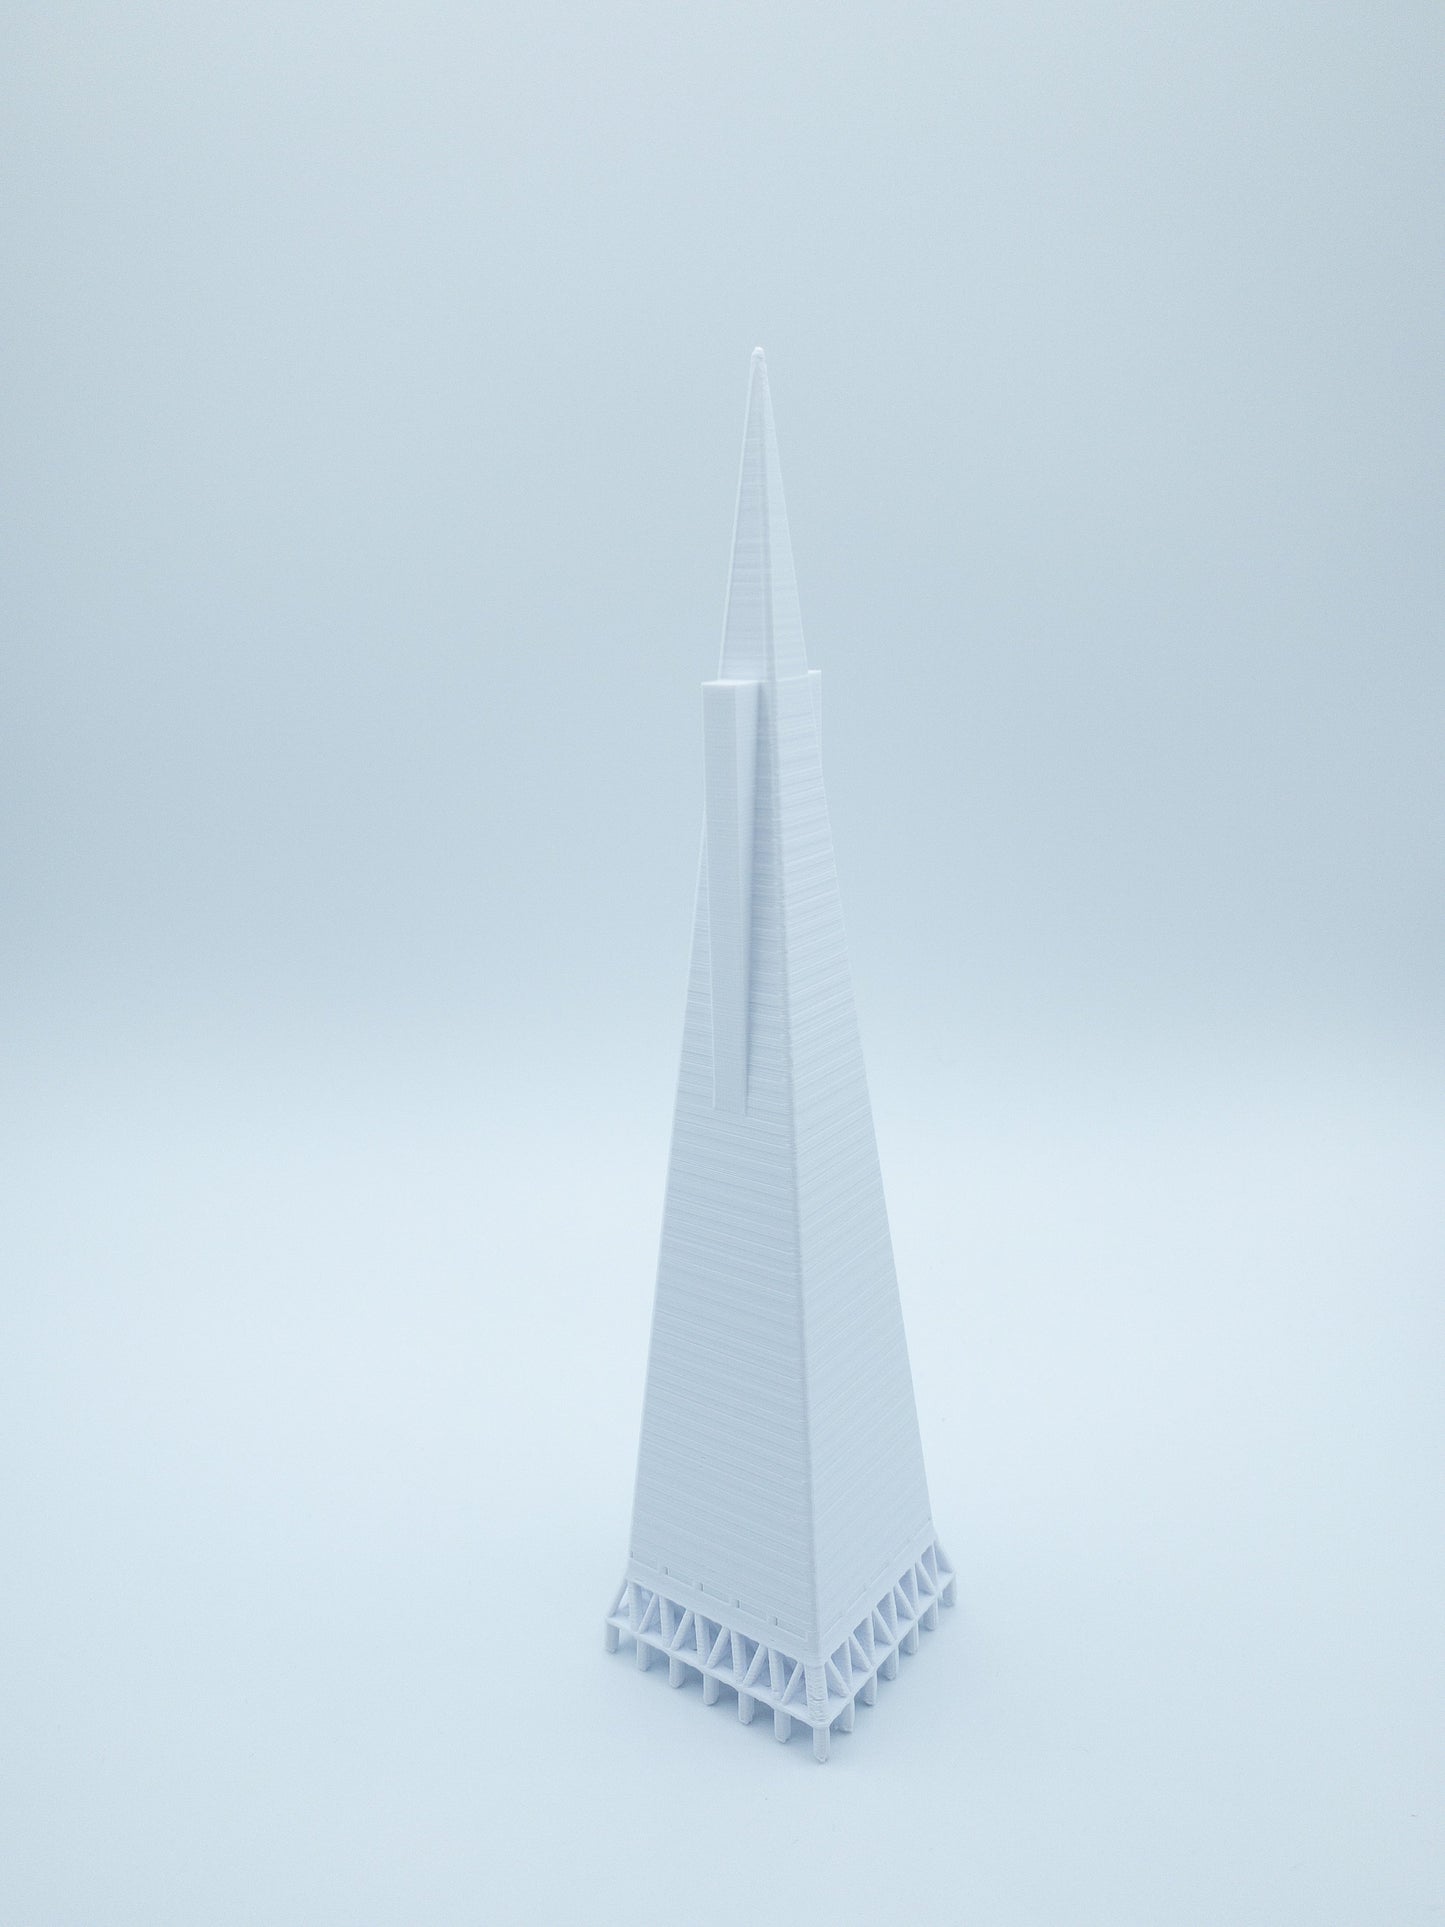 Transamerica Pyramid Model- 3D Printed